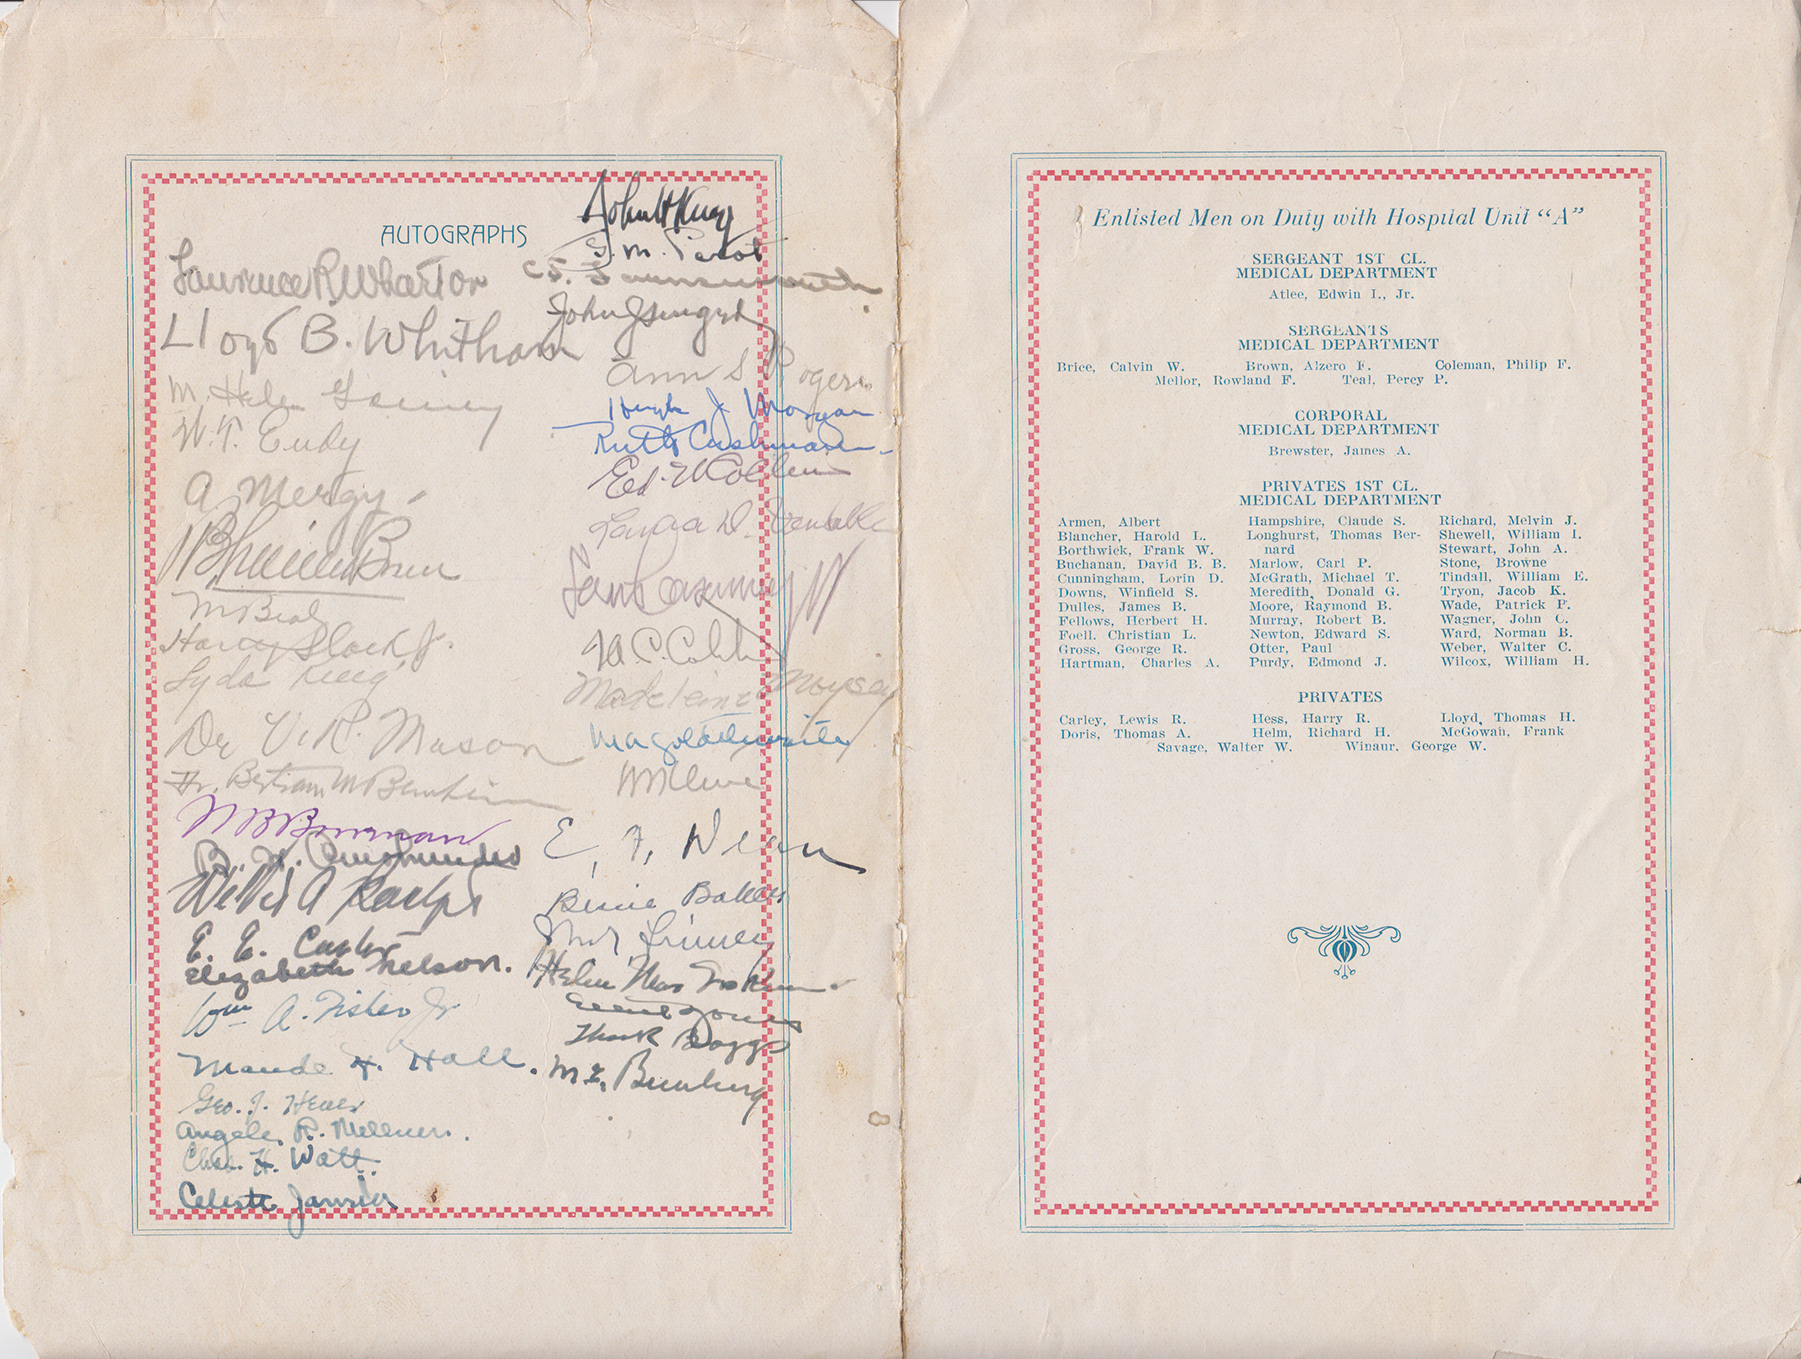 Base Hospital 18, Thanksgiving Dinner Menu, Nov. 18, 1918, autographs and personnel